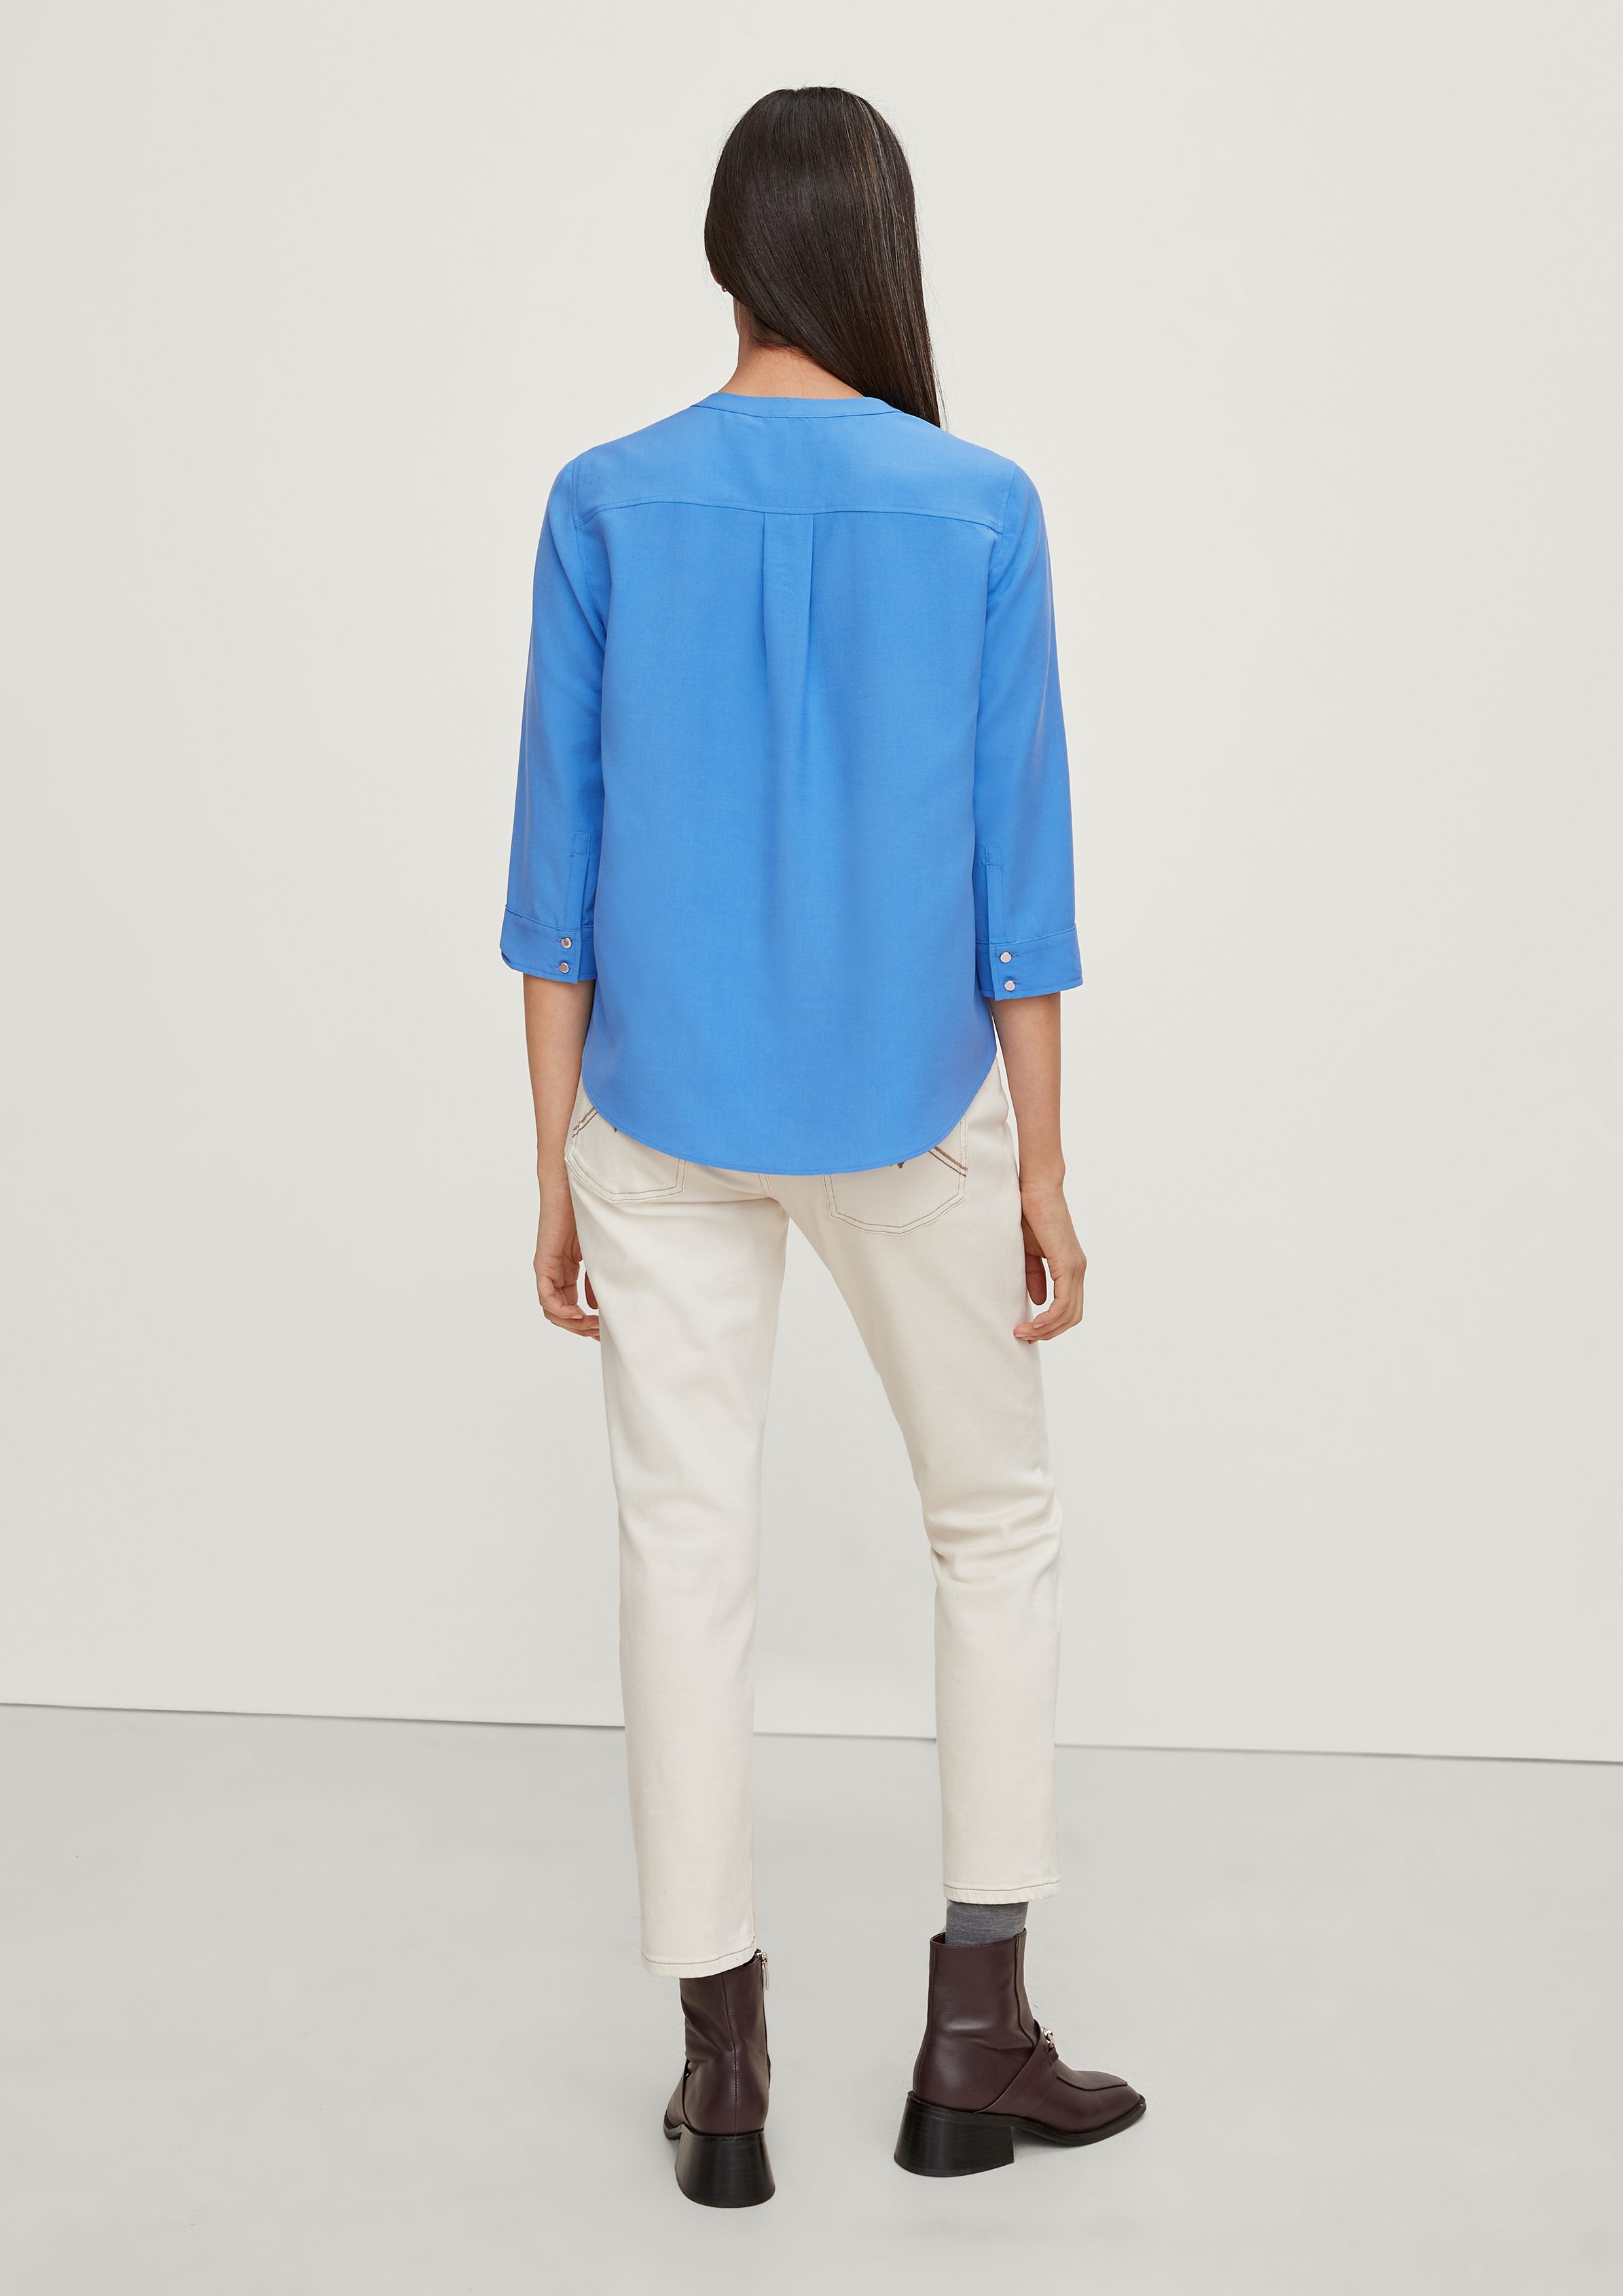 aquarell Comma Tunikaausschnitt mit 3/4-Arm-Shirt blue Bluse